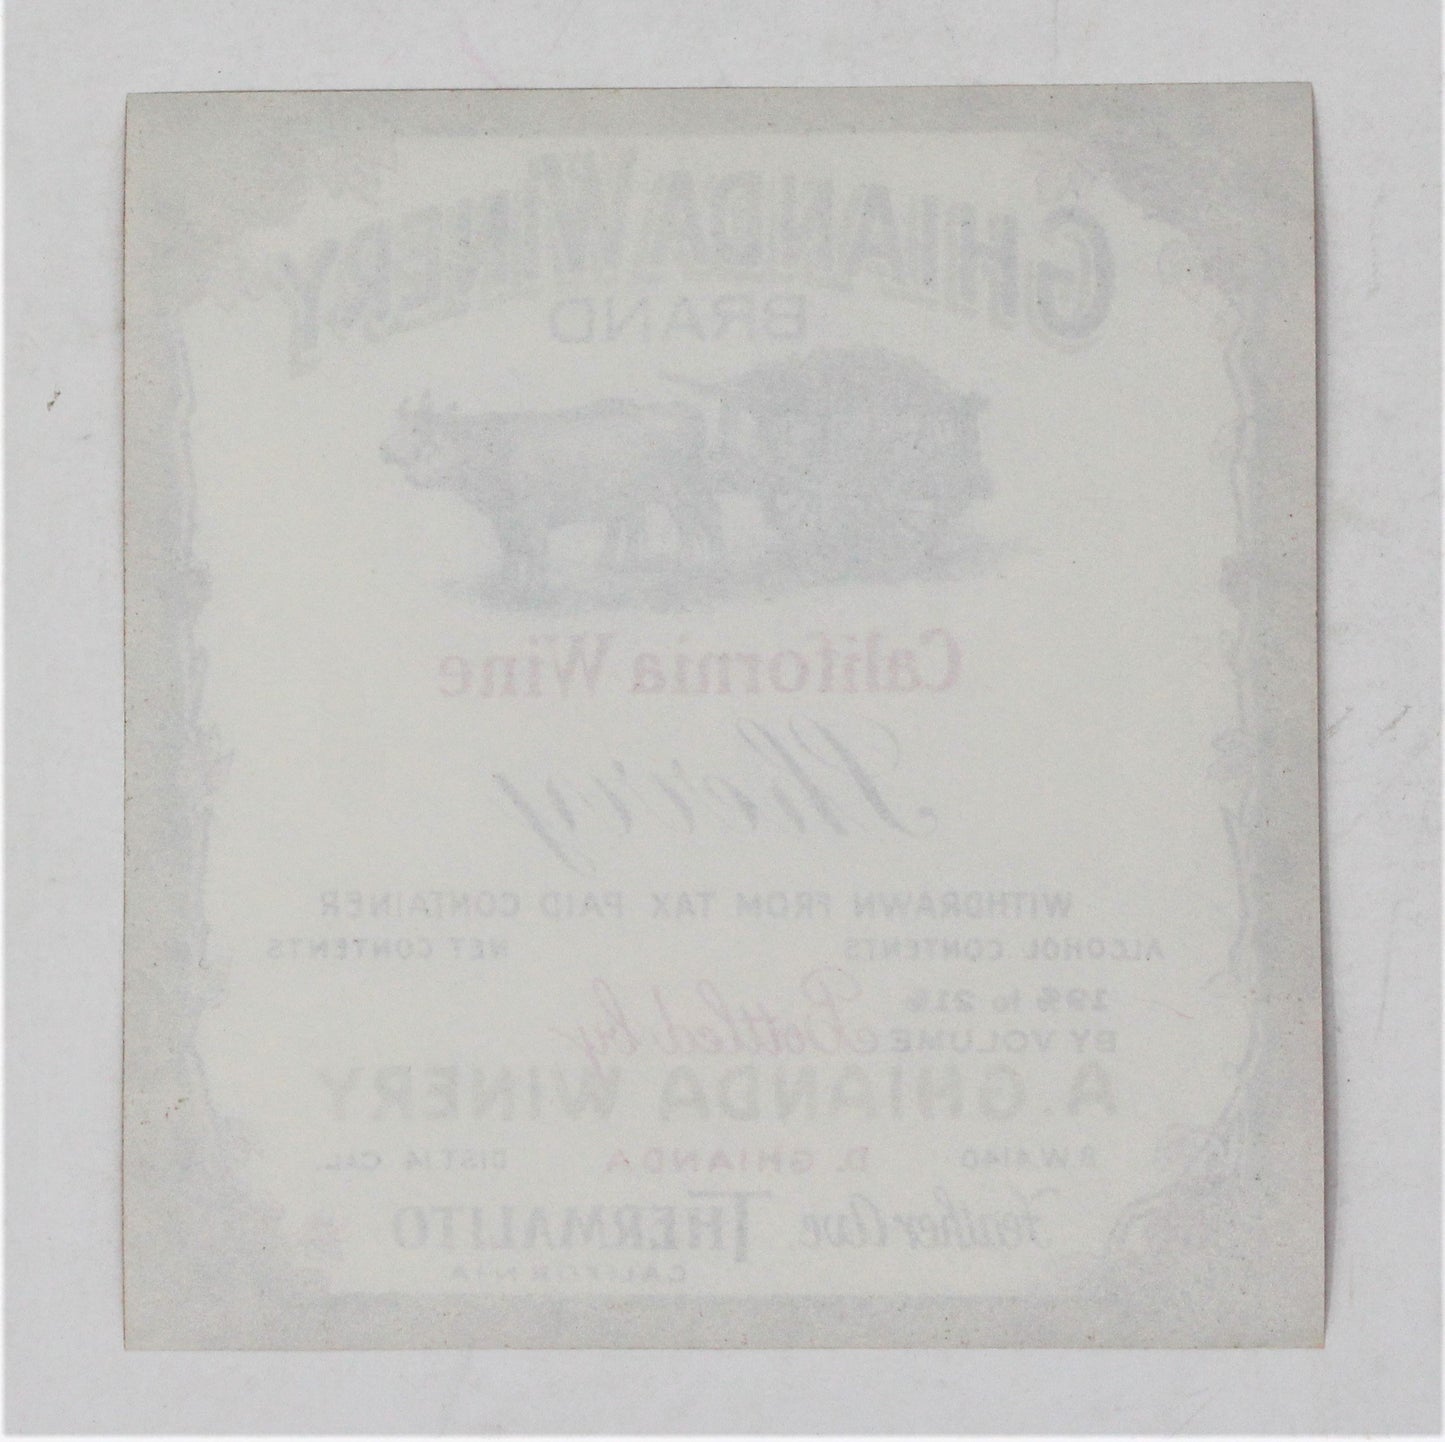 Wine Label, Ghianda Winery California Wine Sherry, Original, RARE NOS, Vintage 1940's